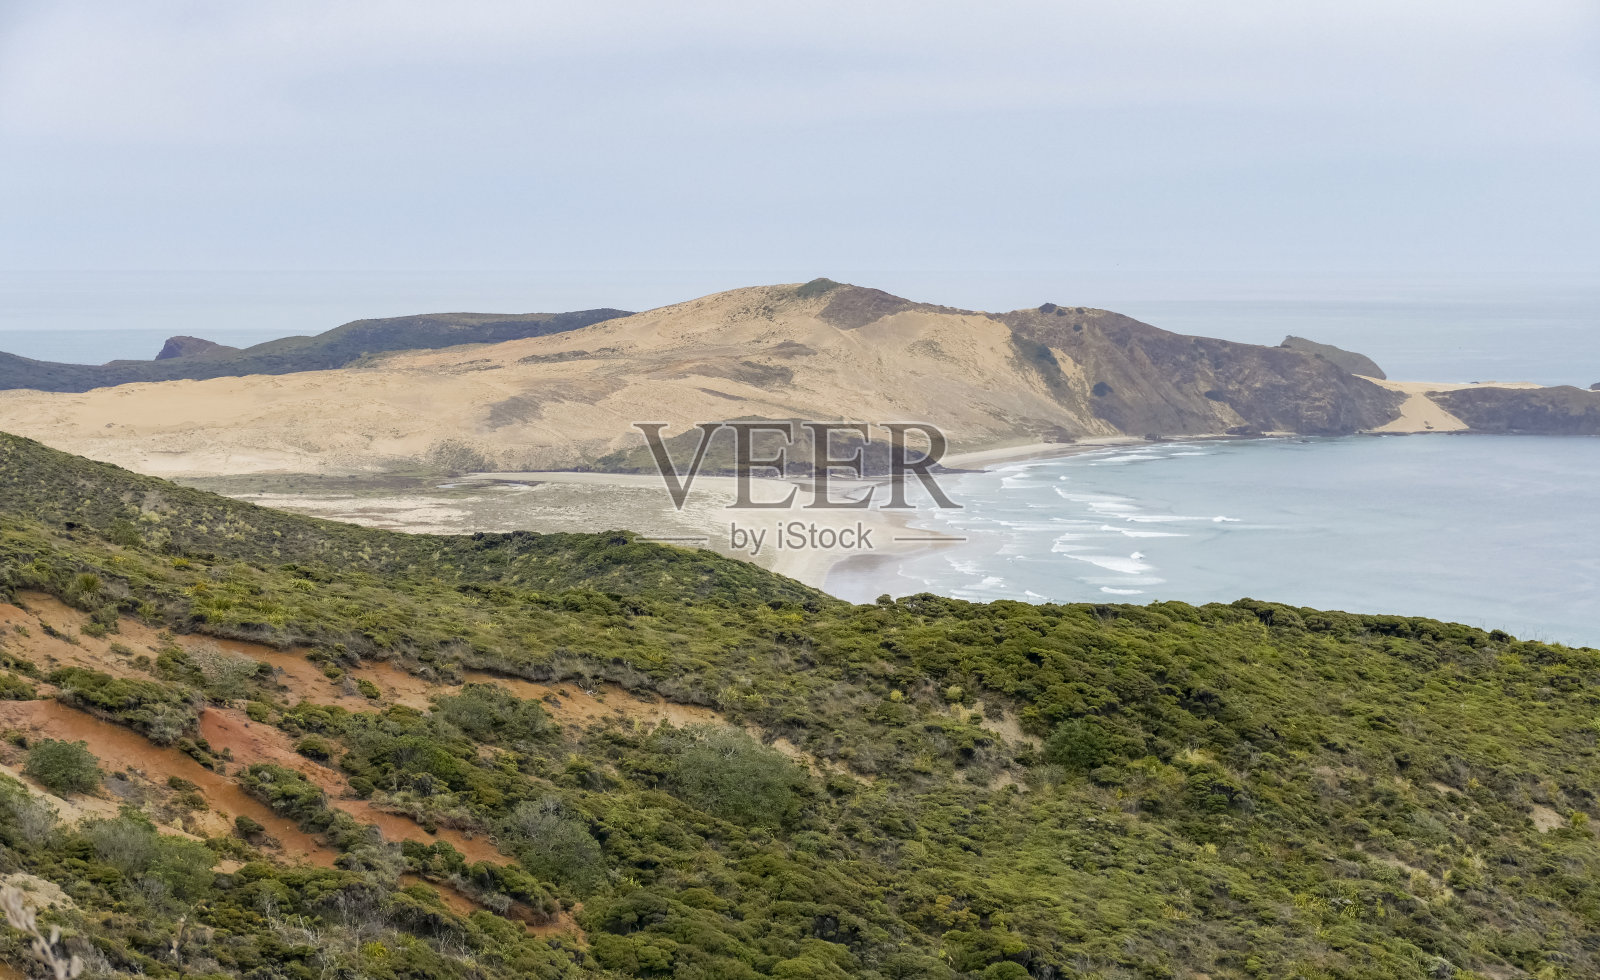 Te Werahi海滩照片摄影图片